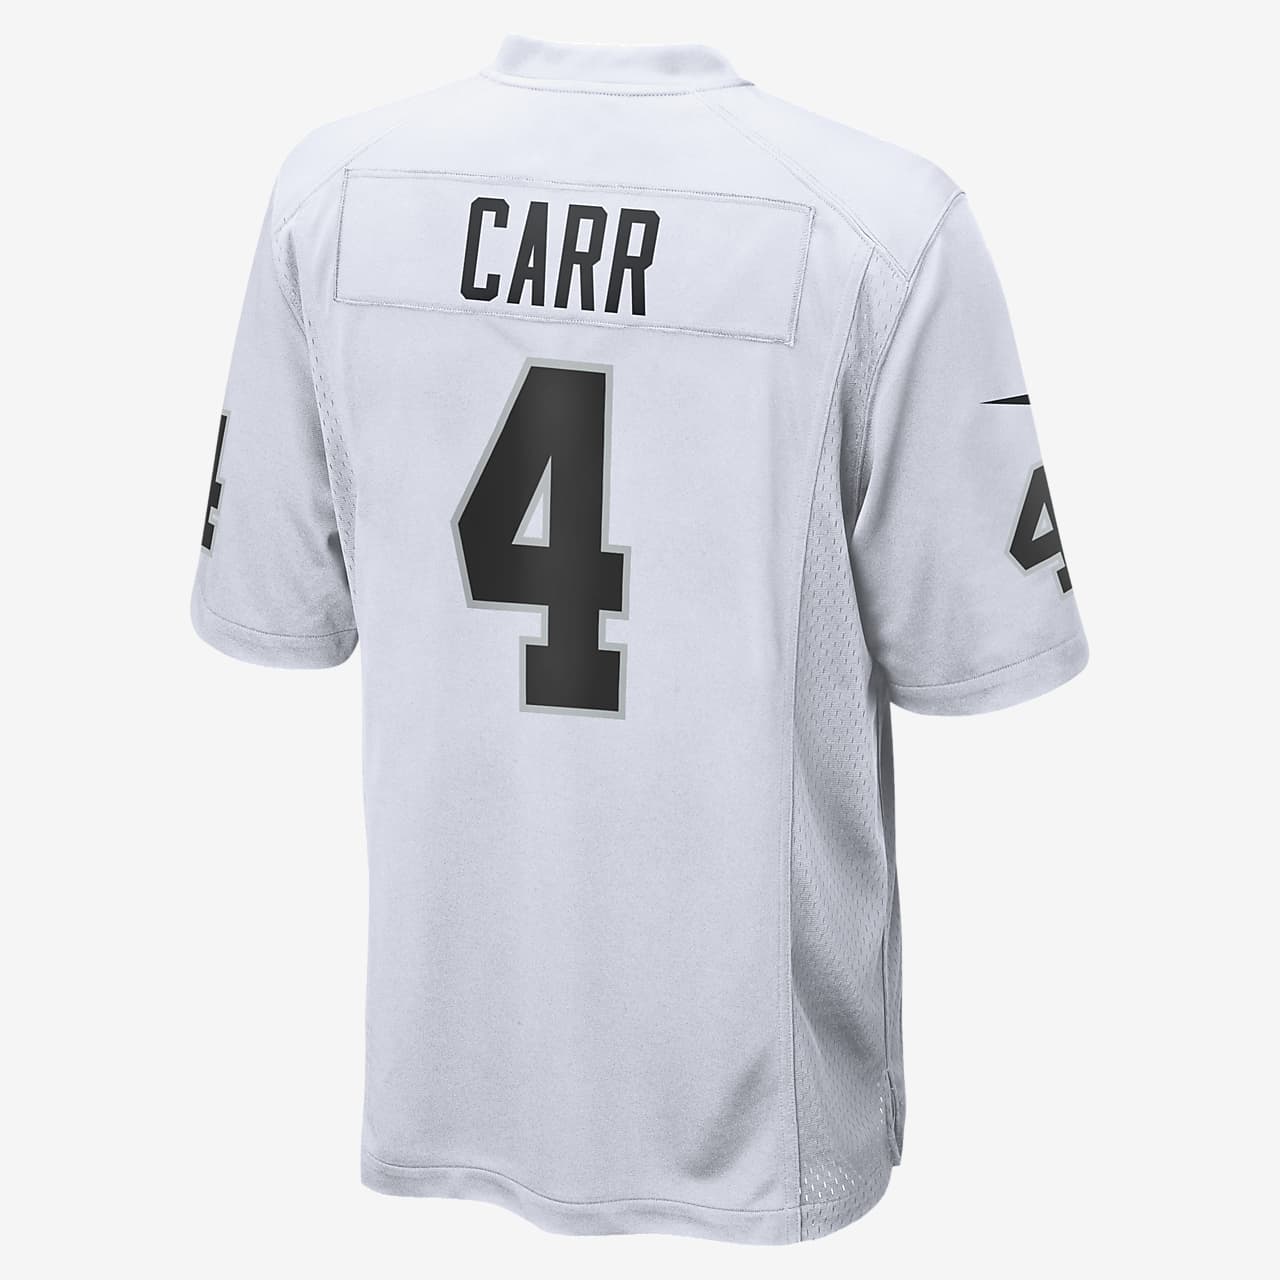 NFL Las Vegas Raiders (Derek Carr) Men's Game Football Jersey. Nike.com